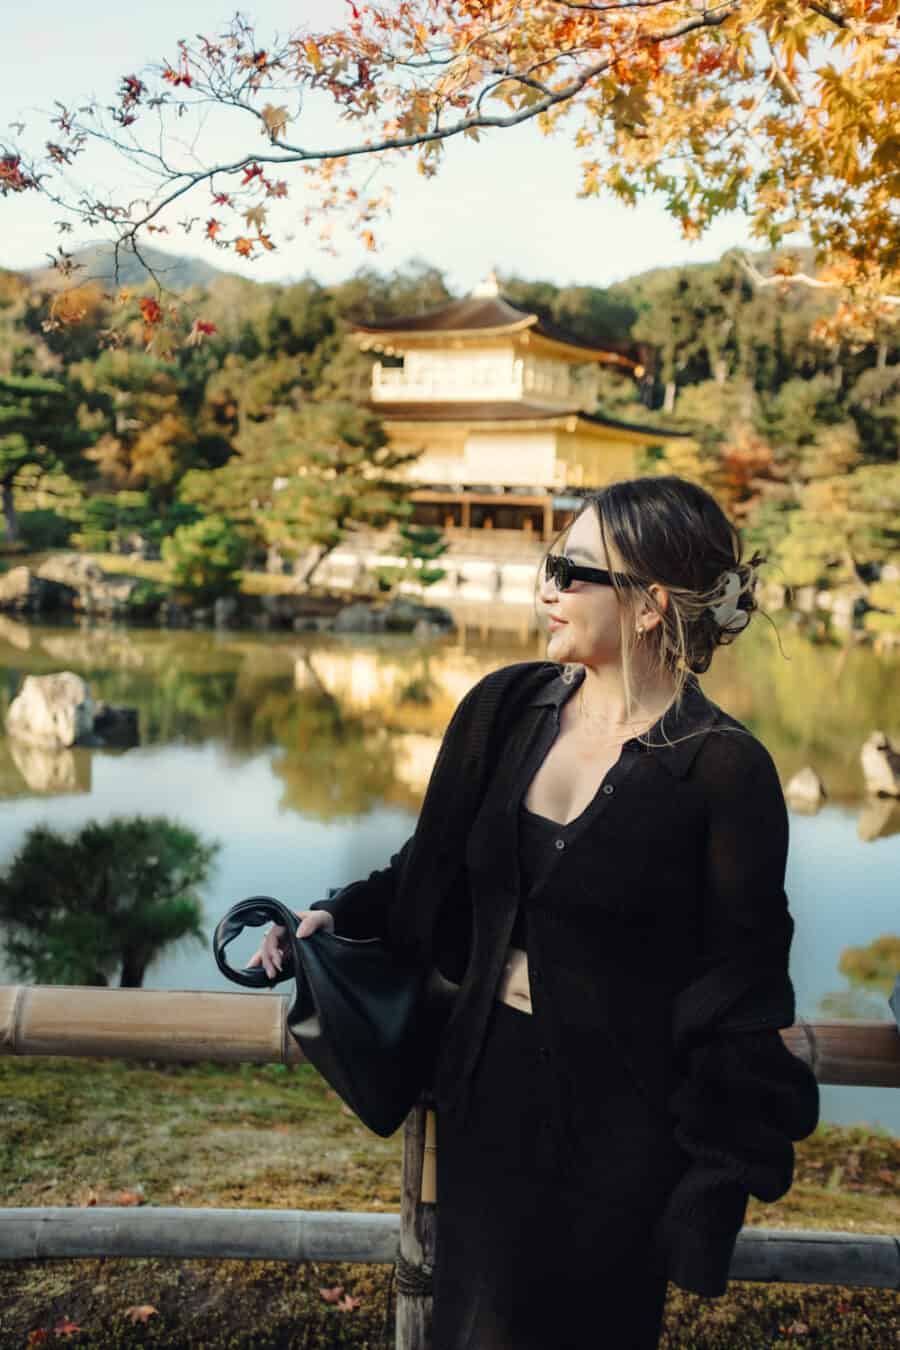 Coco Tran — Aesthetic Travel Blog By Film Photographer Coco Tran https://cocotran.com/golden-temple-kyoto-kinkakuji/